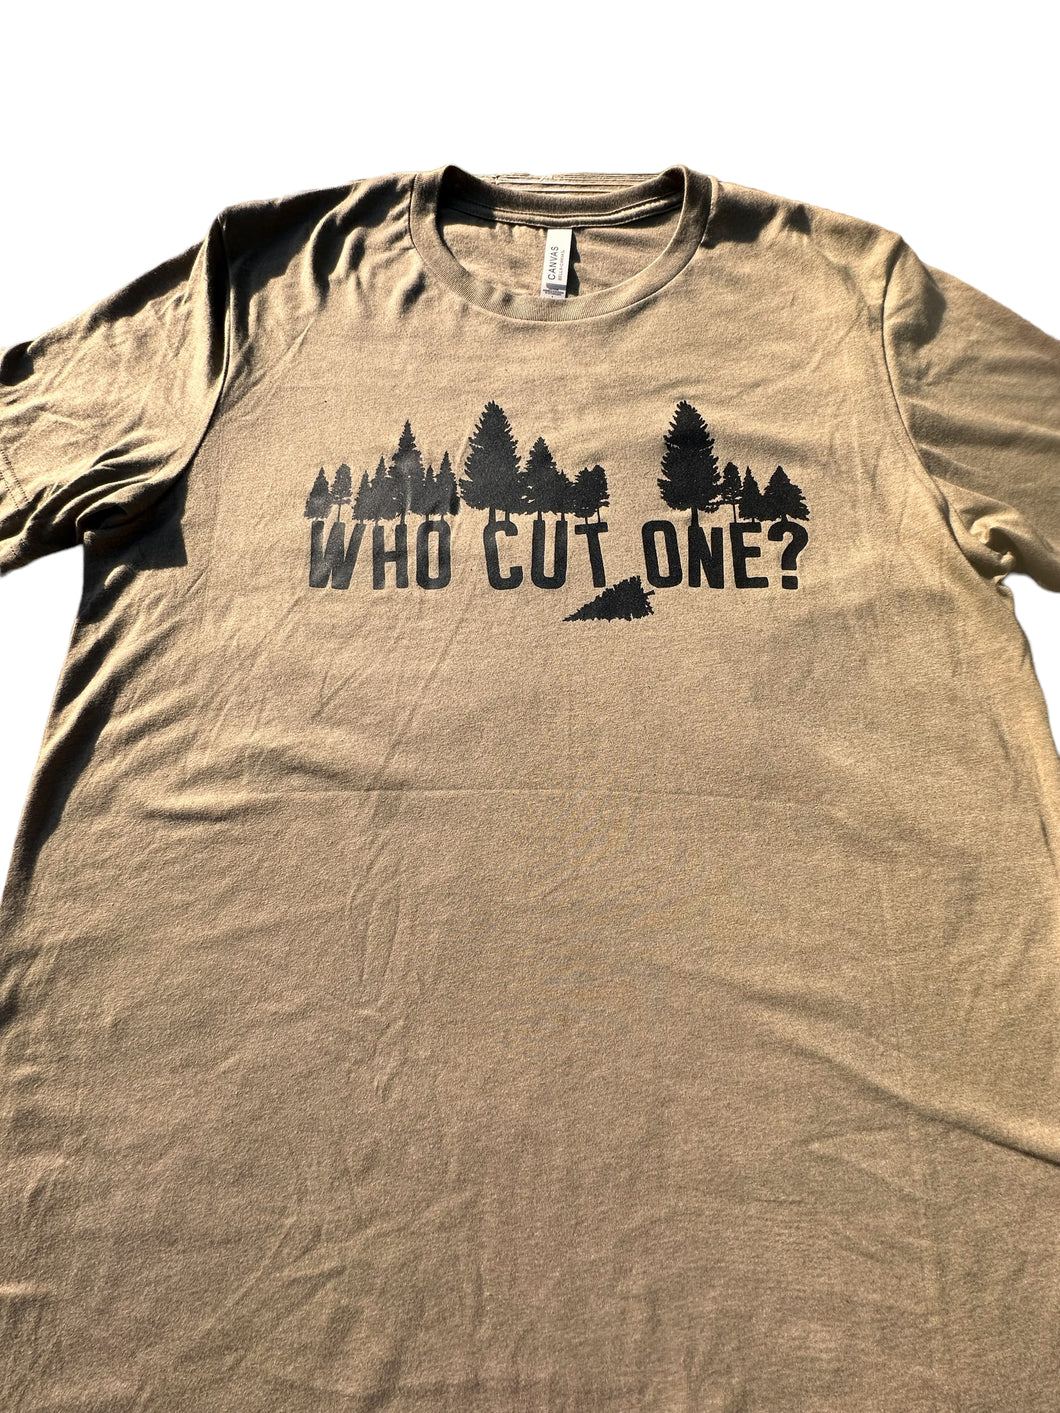 Who Cut One?? UNISEX Short-Sleeve T-Shirt